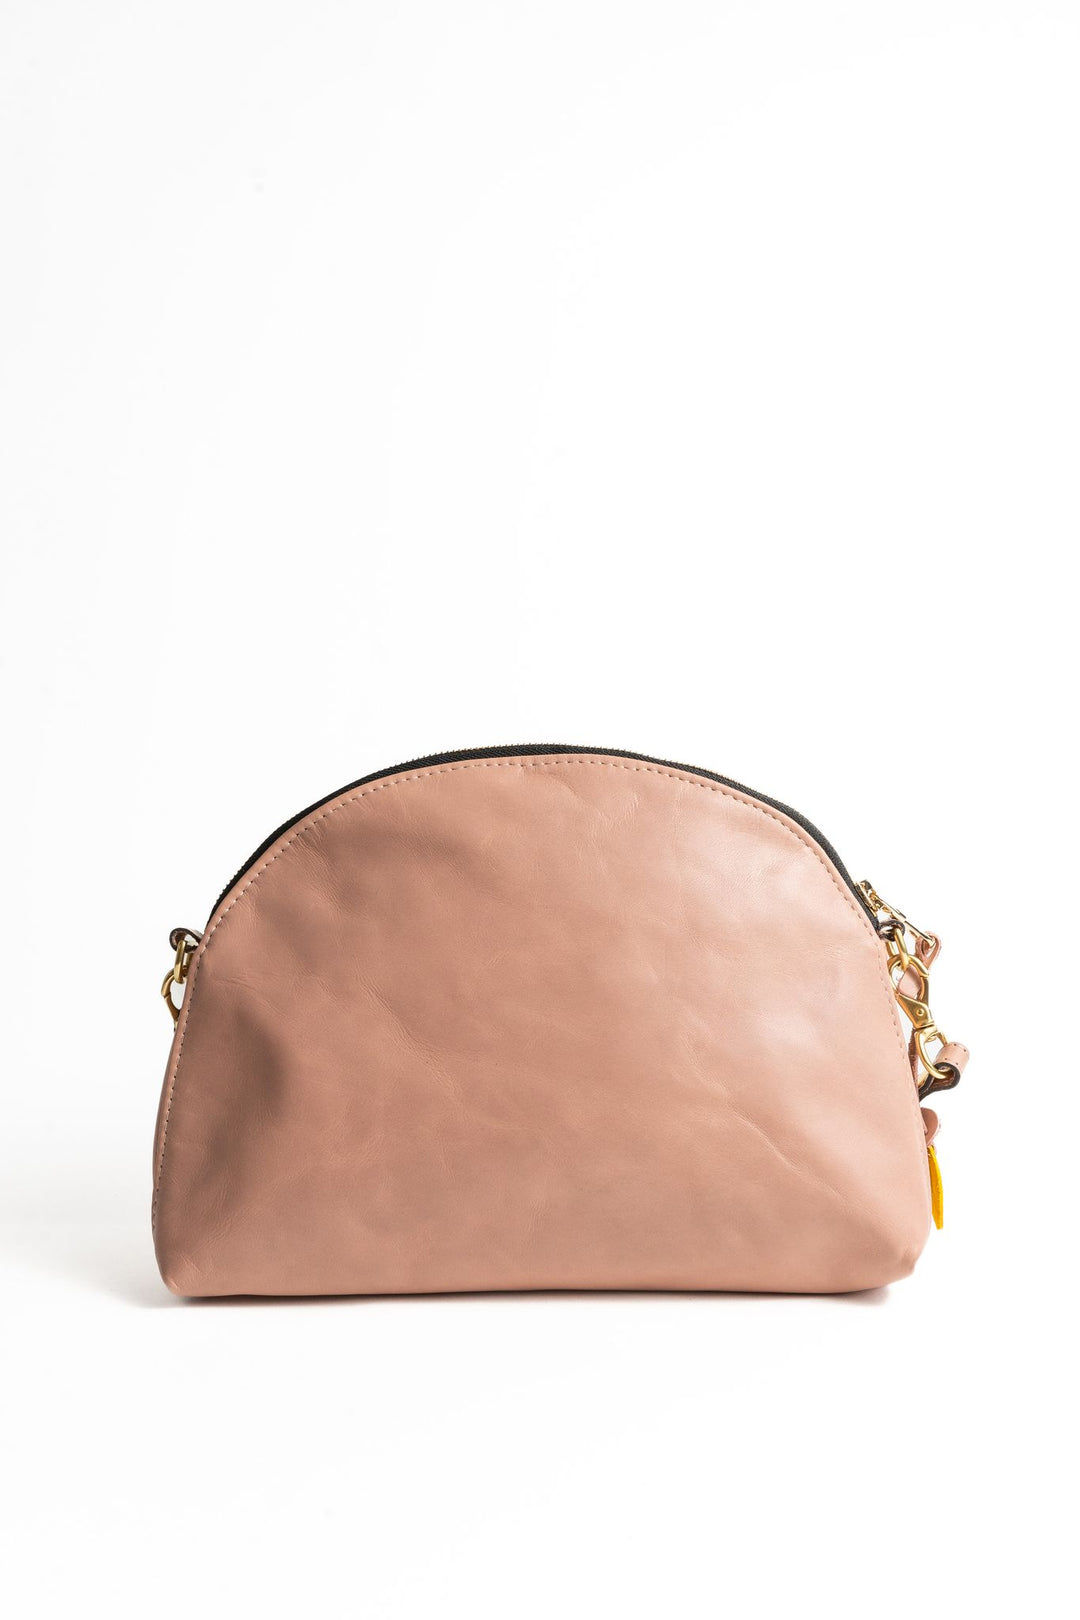 Hopper | Strawberry Beige Leather